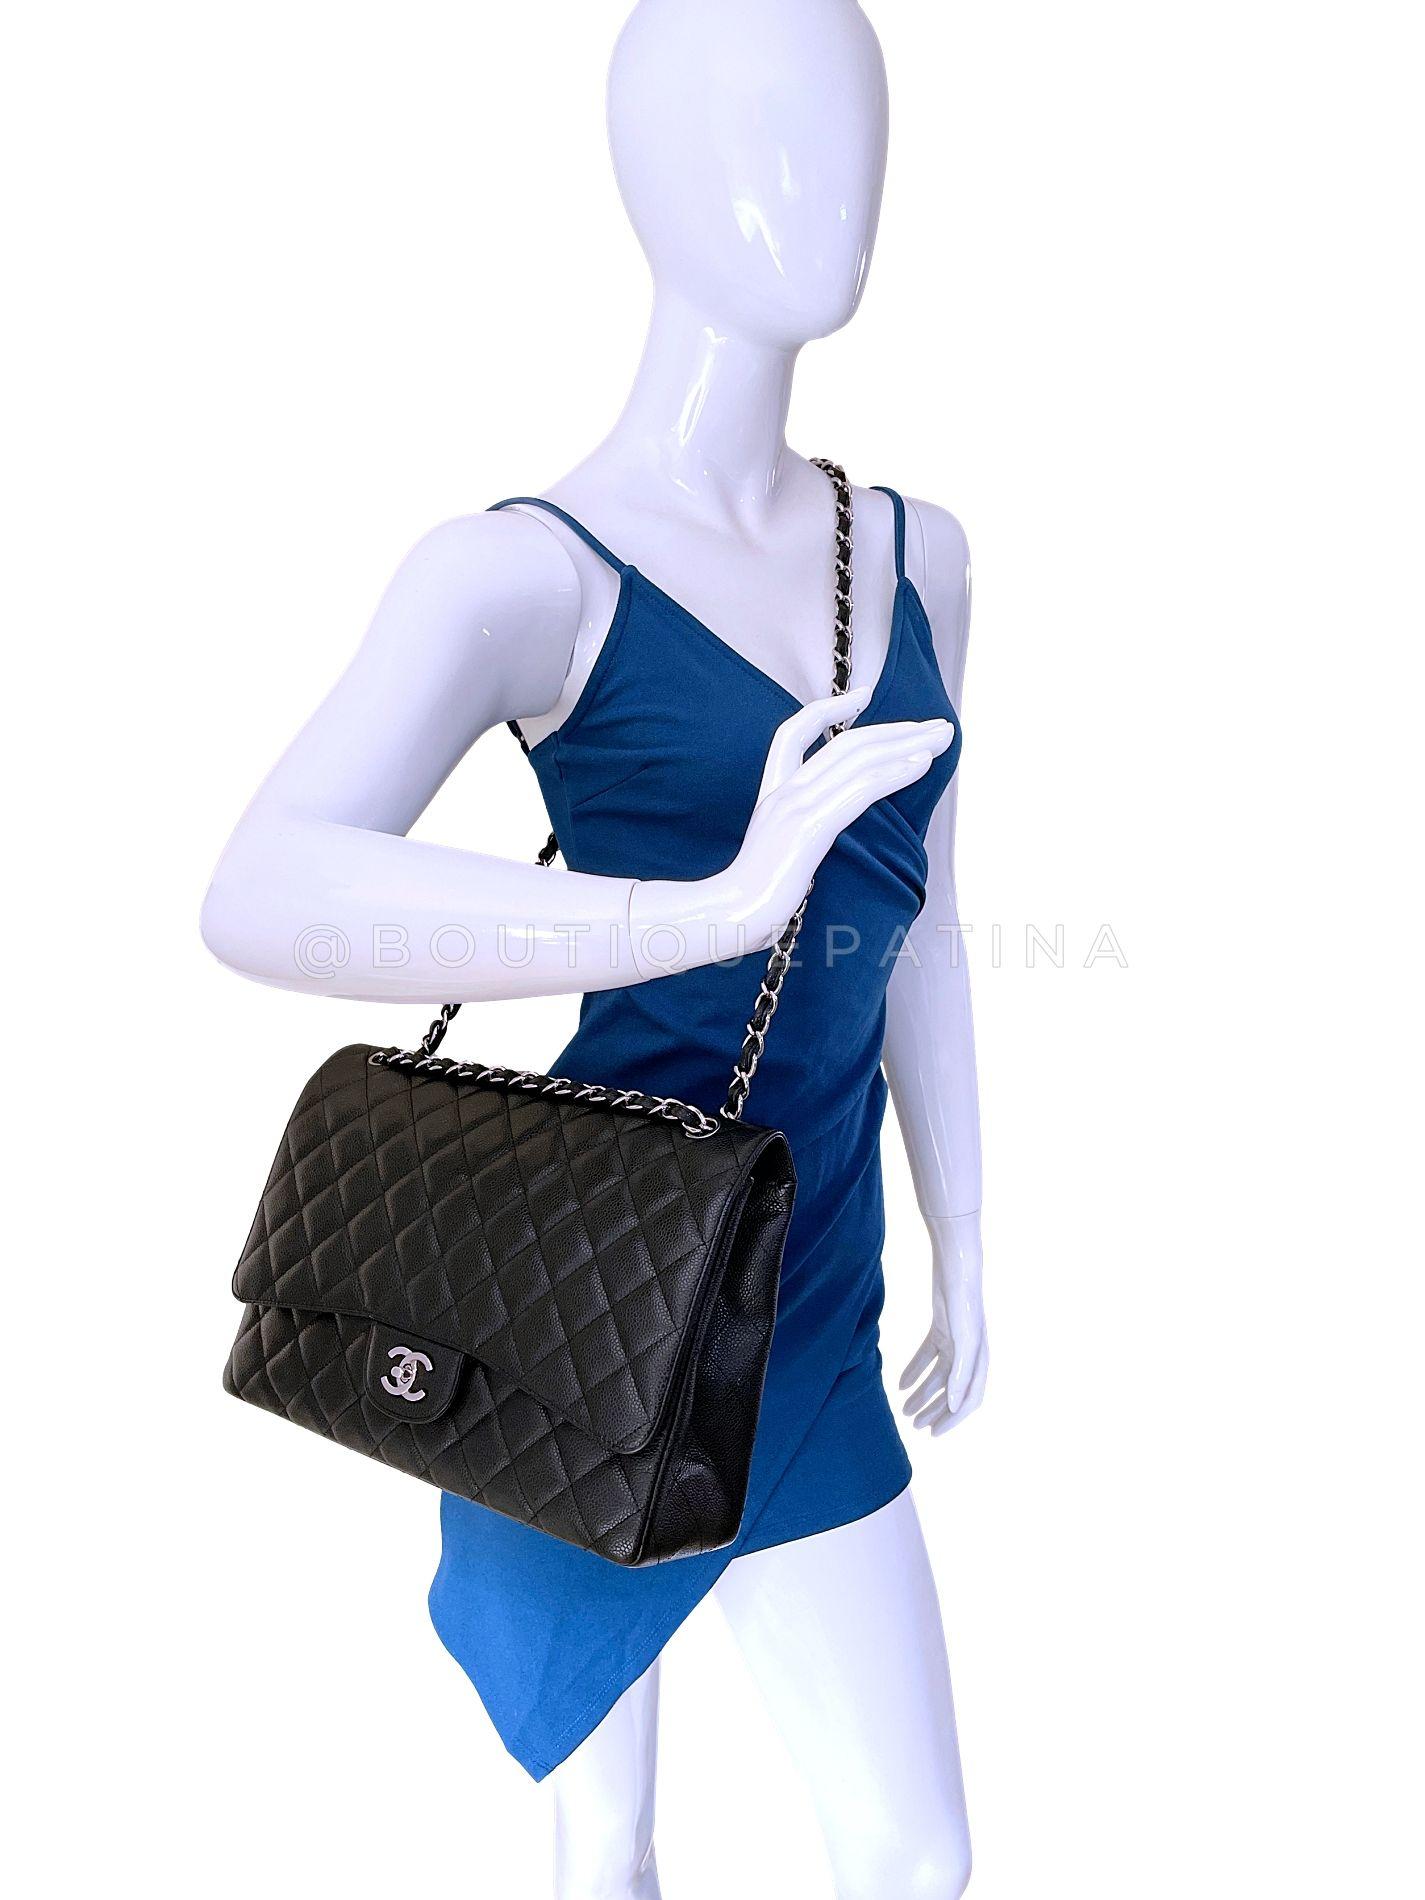 Chanel Black Caviar Maxi Flap Bag SHW Single 66714 For Sale 10